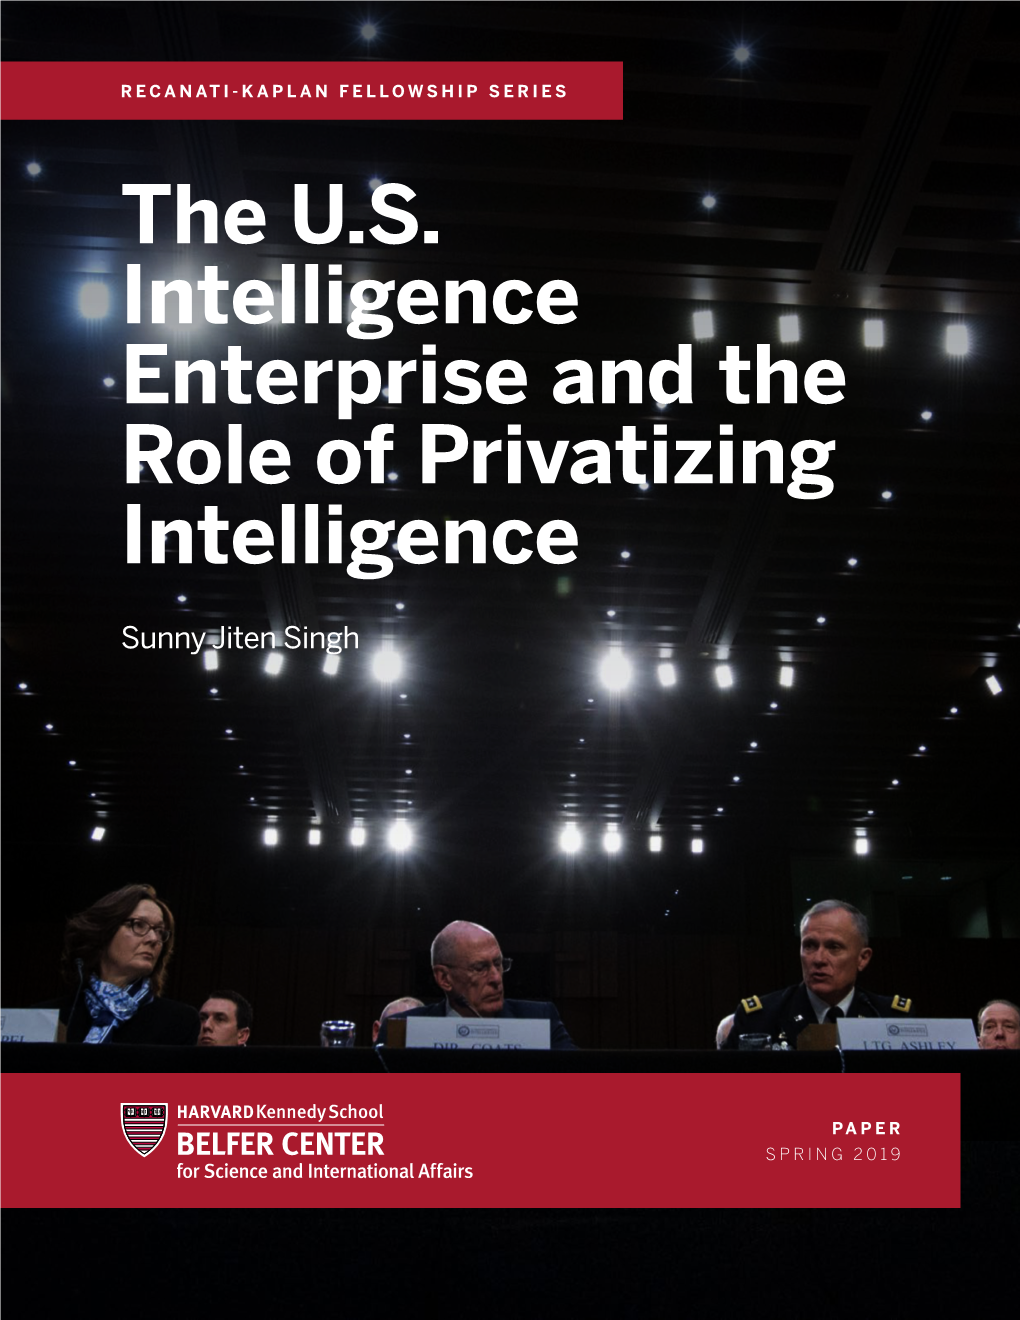 The U.S. Intelligence Enterprise and the Role of Privatizing Intelligence